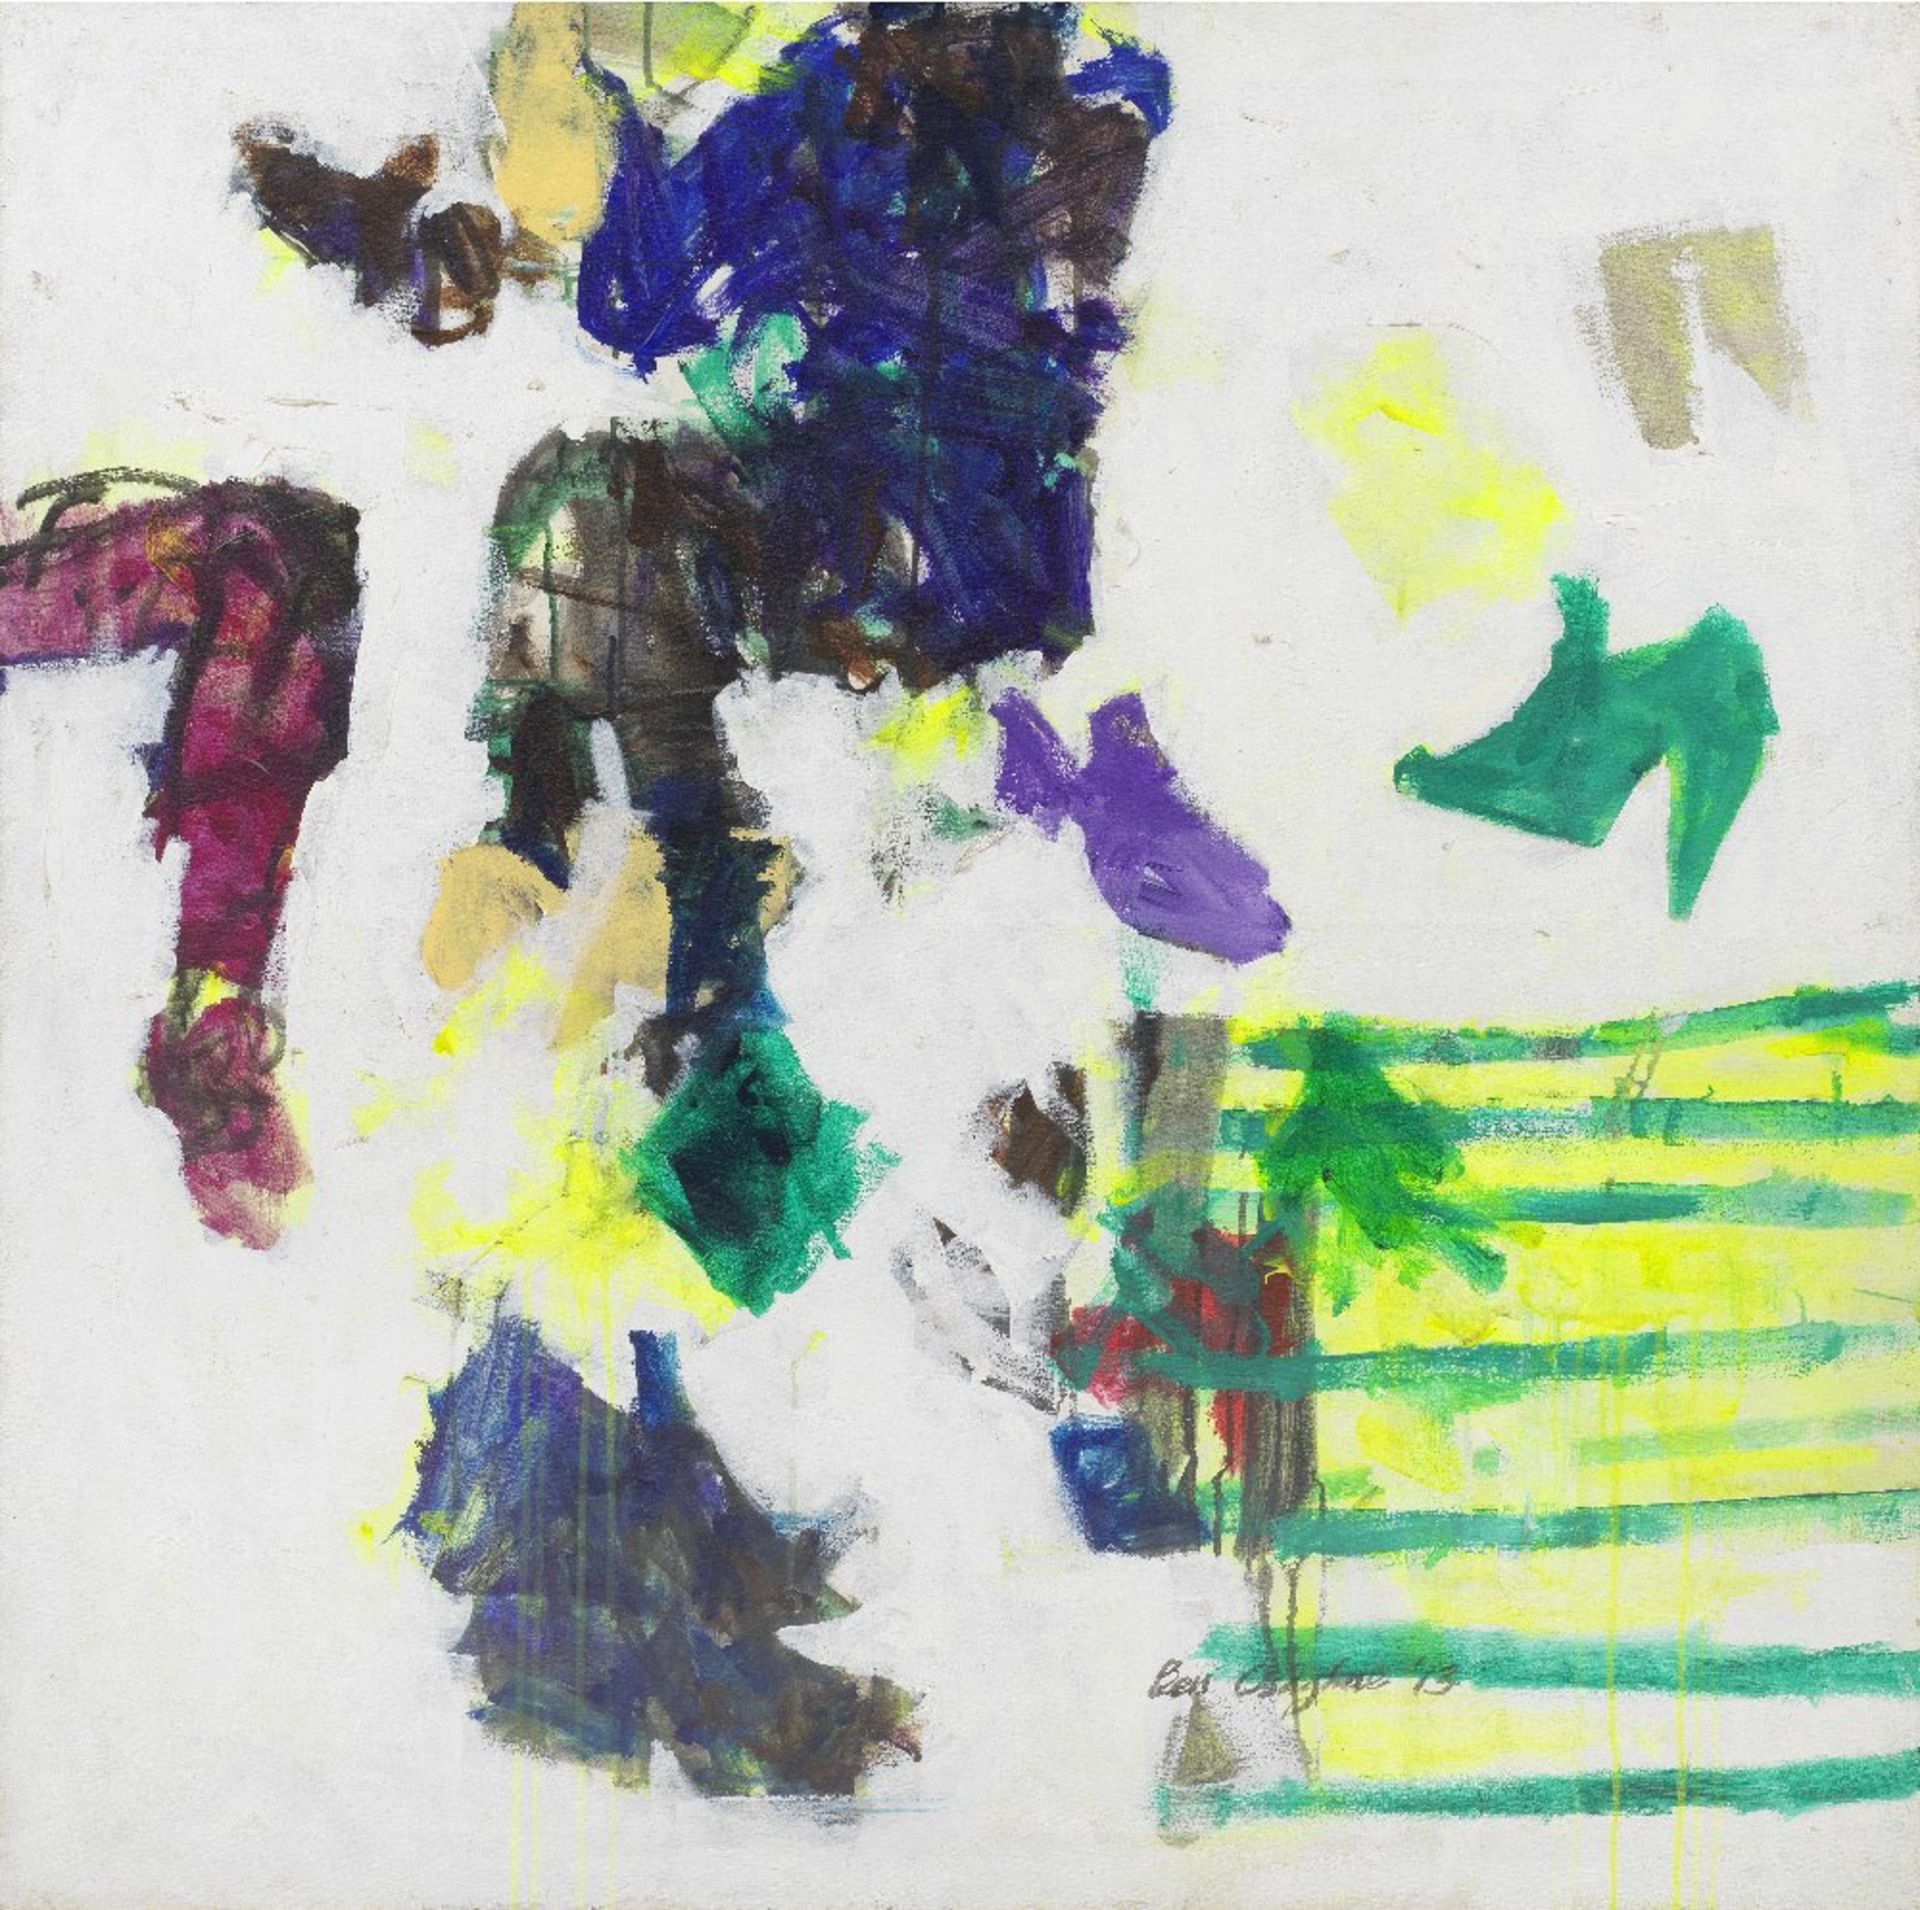 Ben Osaghae (Nigerian, 1962-2017) Nobility of Labour, 2013, 112 x 110 cm